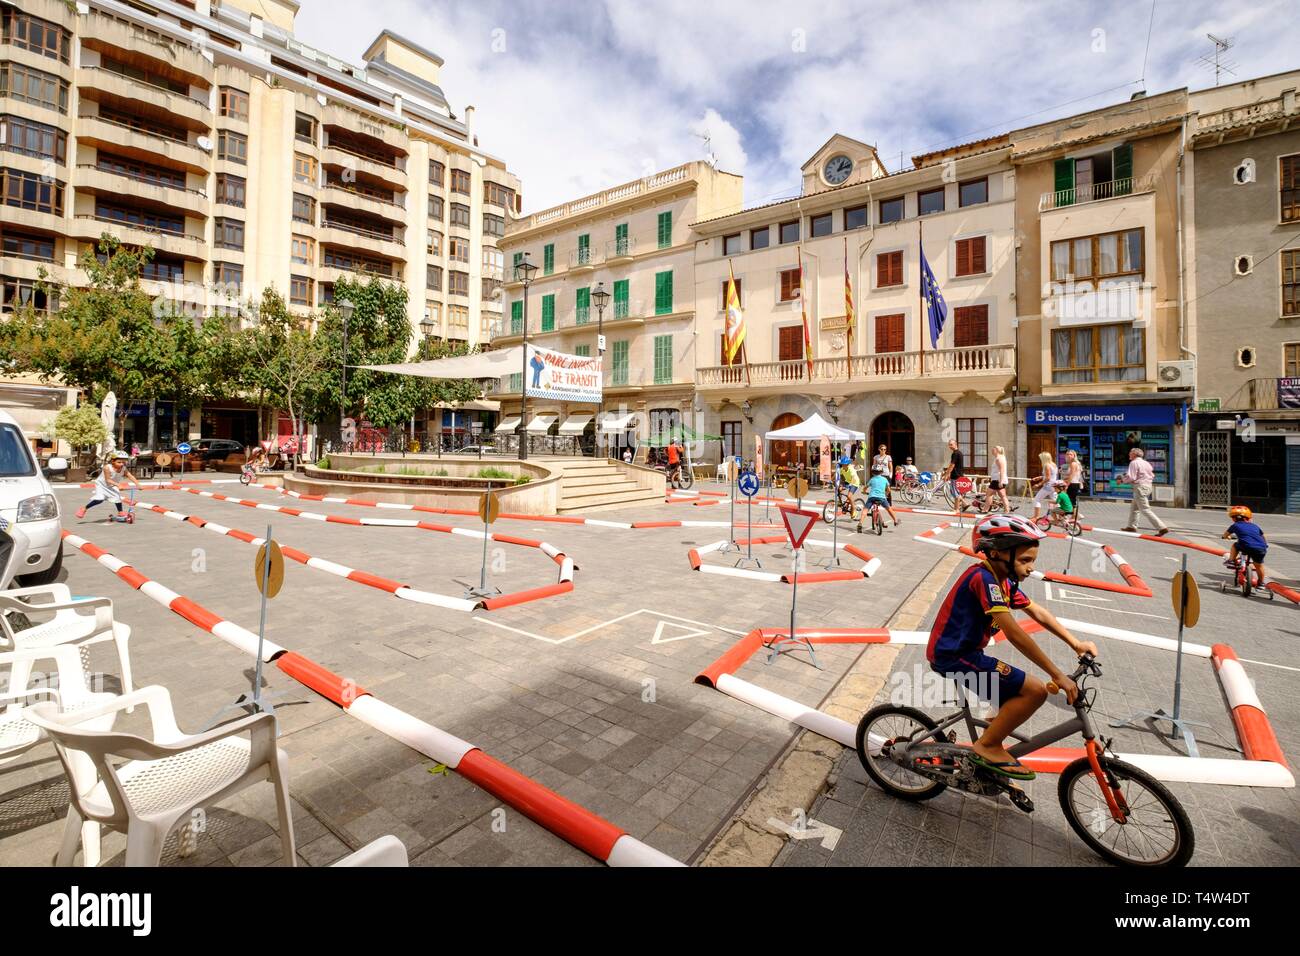 Parque infantil de Transito frente El Ayuntamiento, Inca, Mallorca, Balearen, Spanien, Europa. Stockfoto